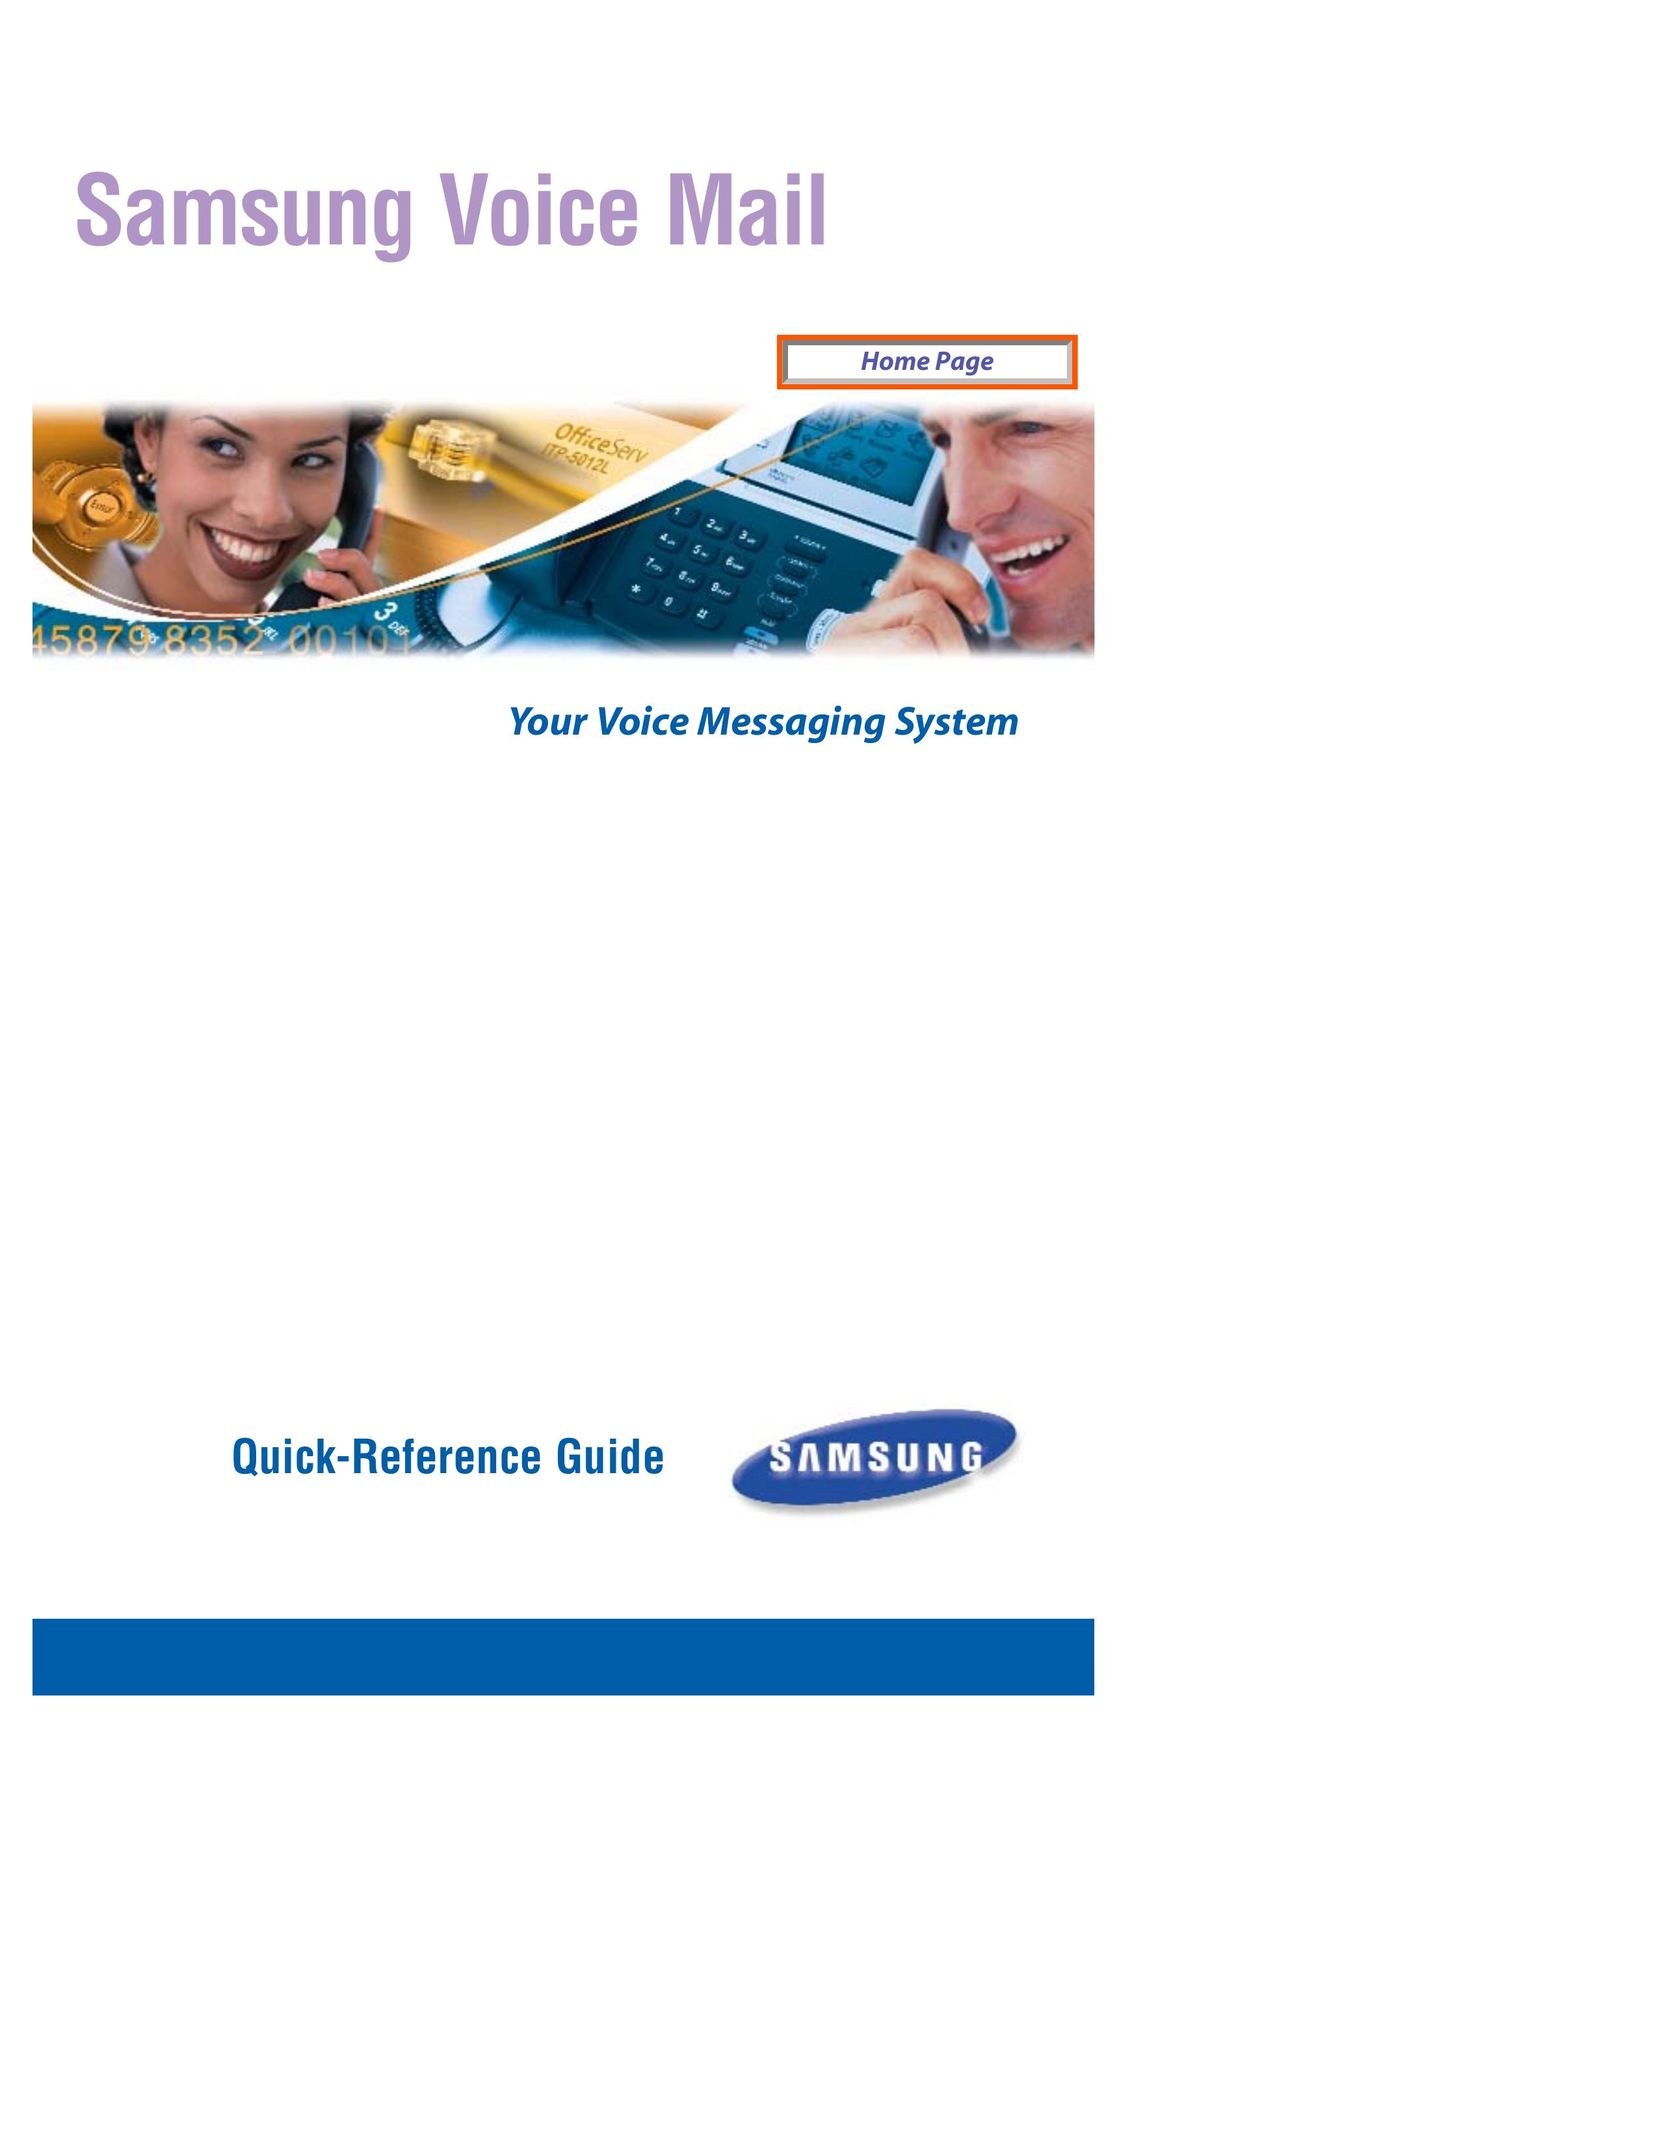 Samsung SVMi-4E Answering Machine User Manual